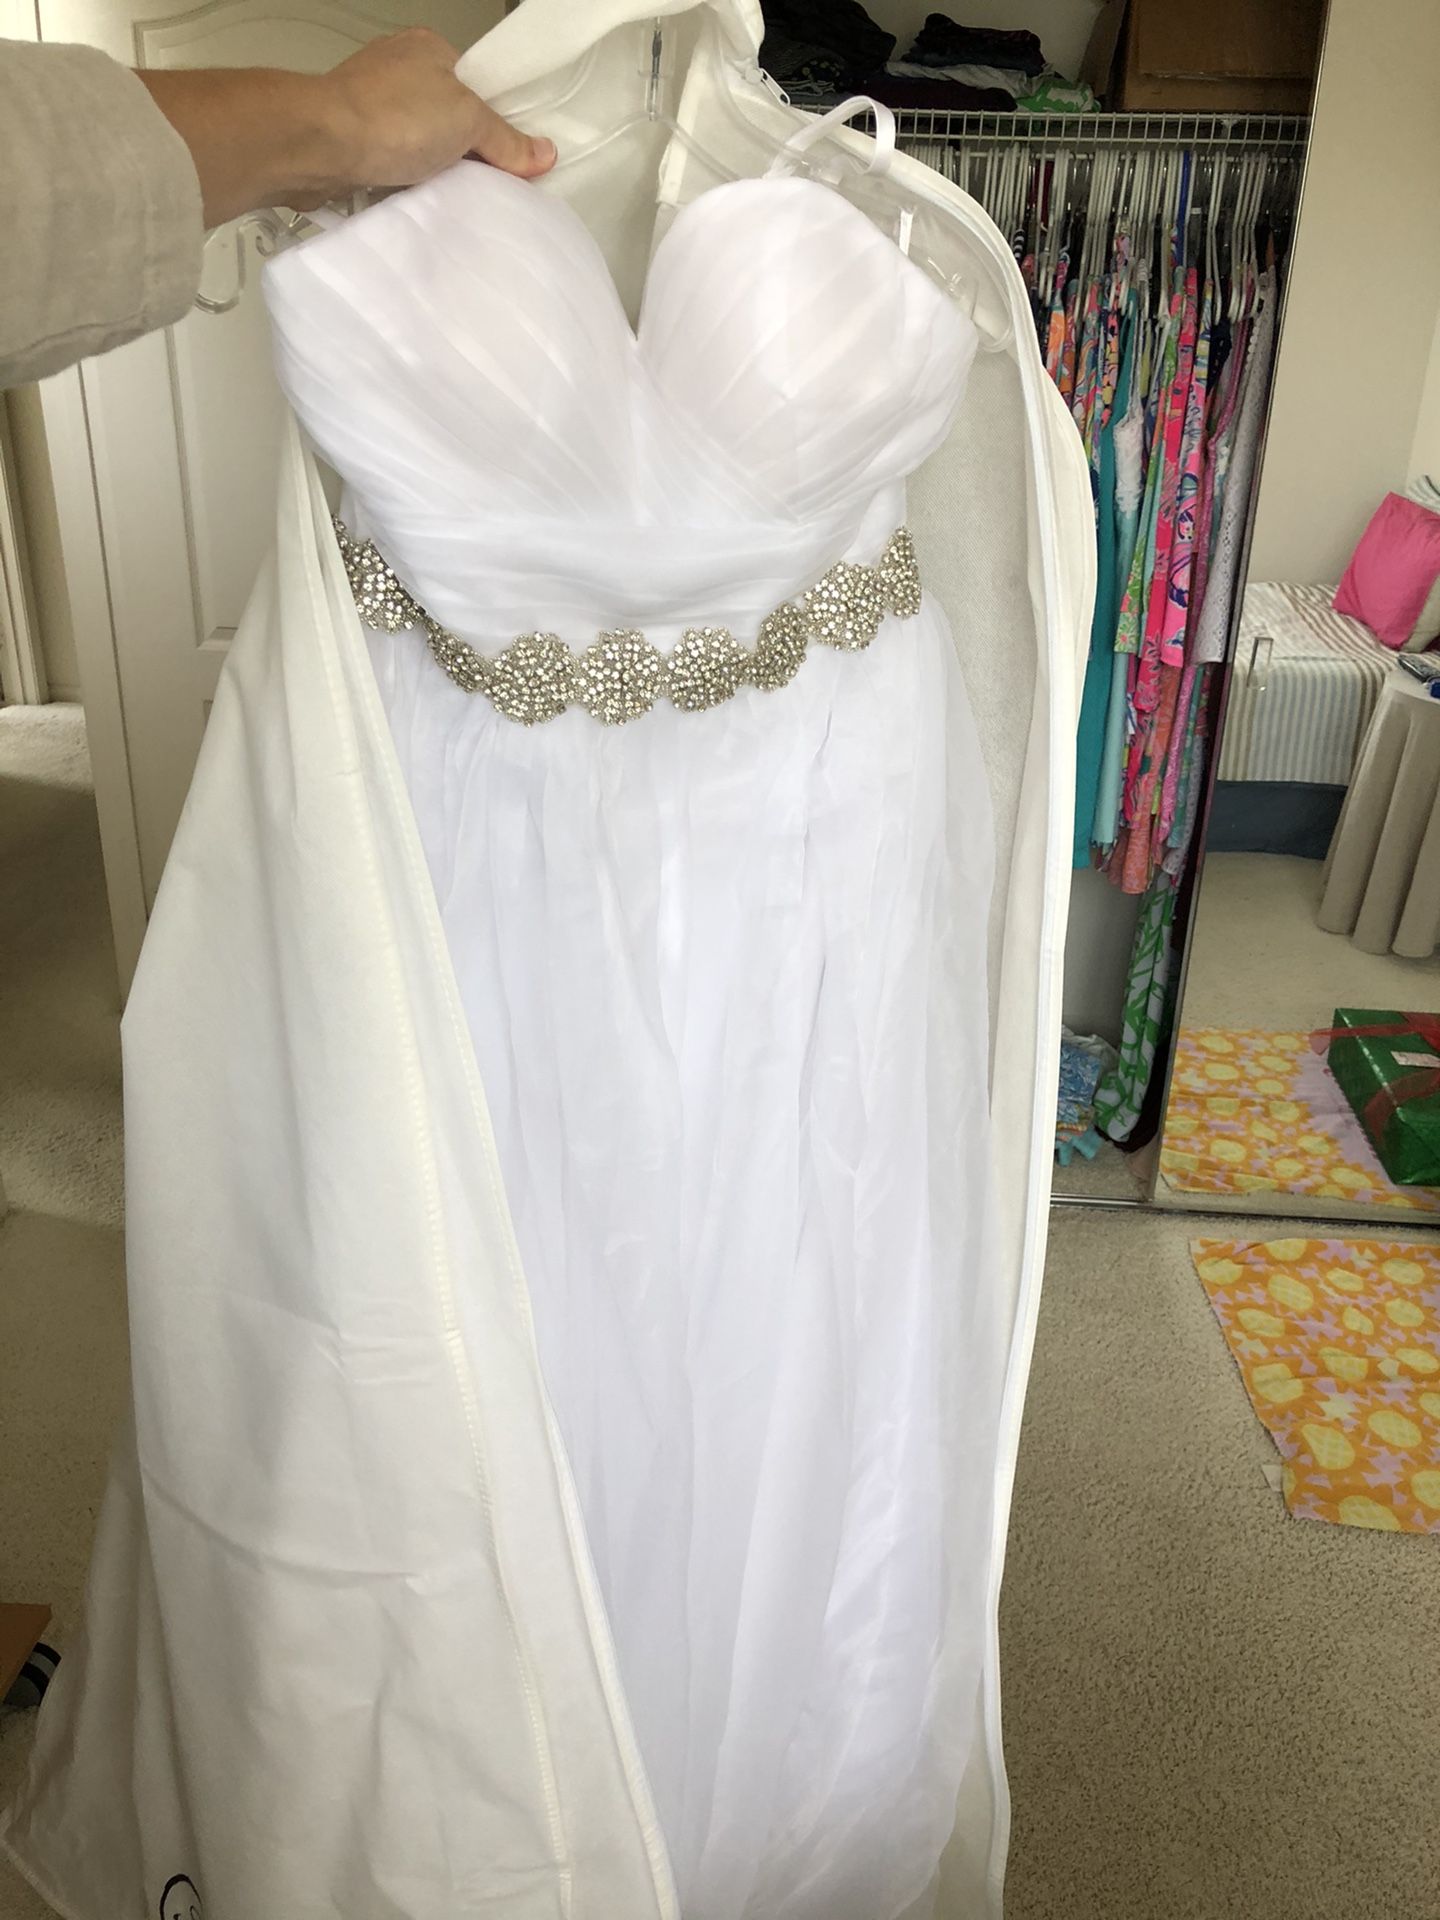 (Never worn) WEDDING DRESS - BRIDAL GOWN - Size 6